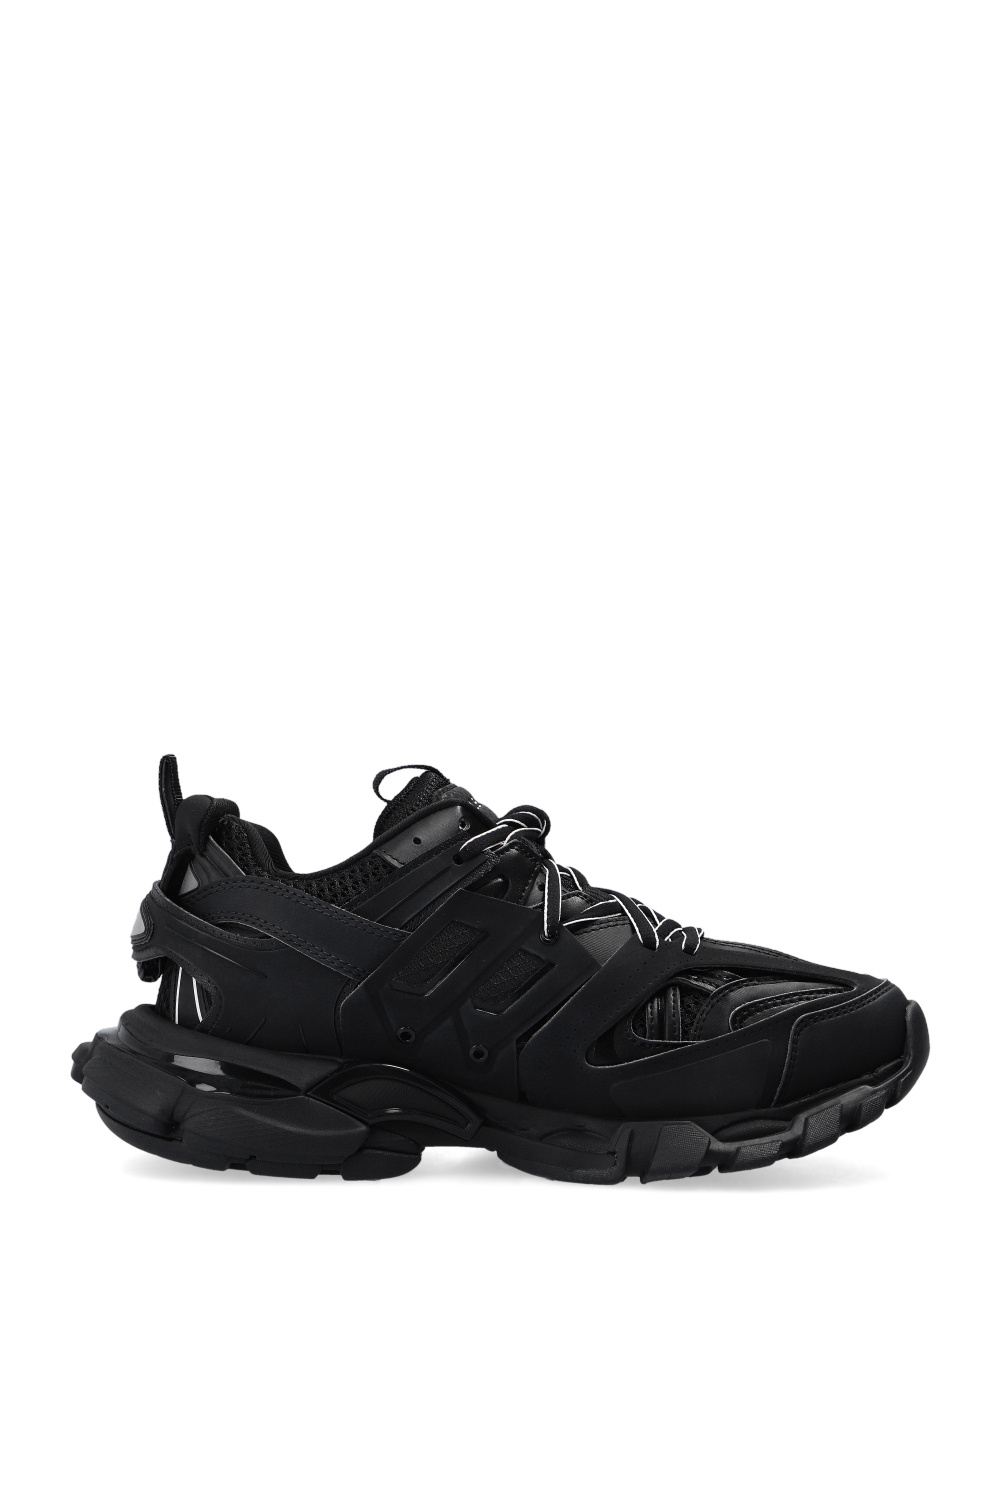 IetpShops AE - Black sneakers Balenciaga - Boots SOLO FEMME 14705-01-N33 Black